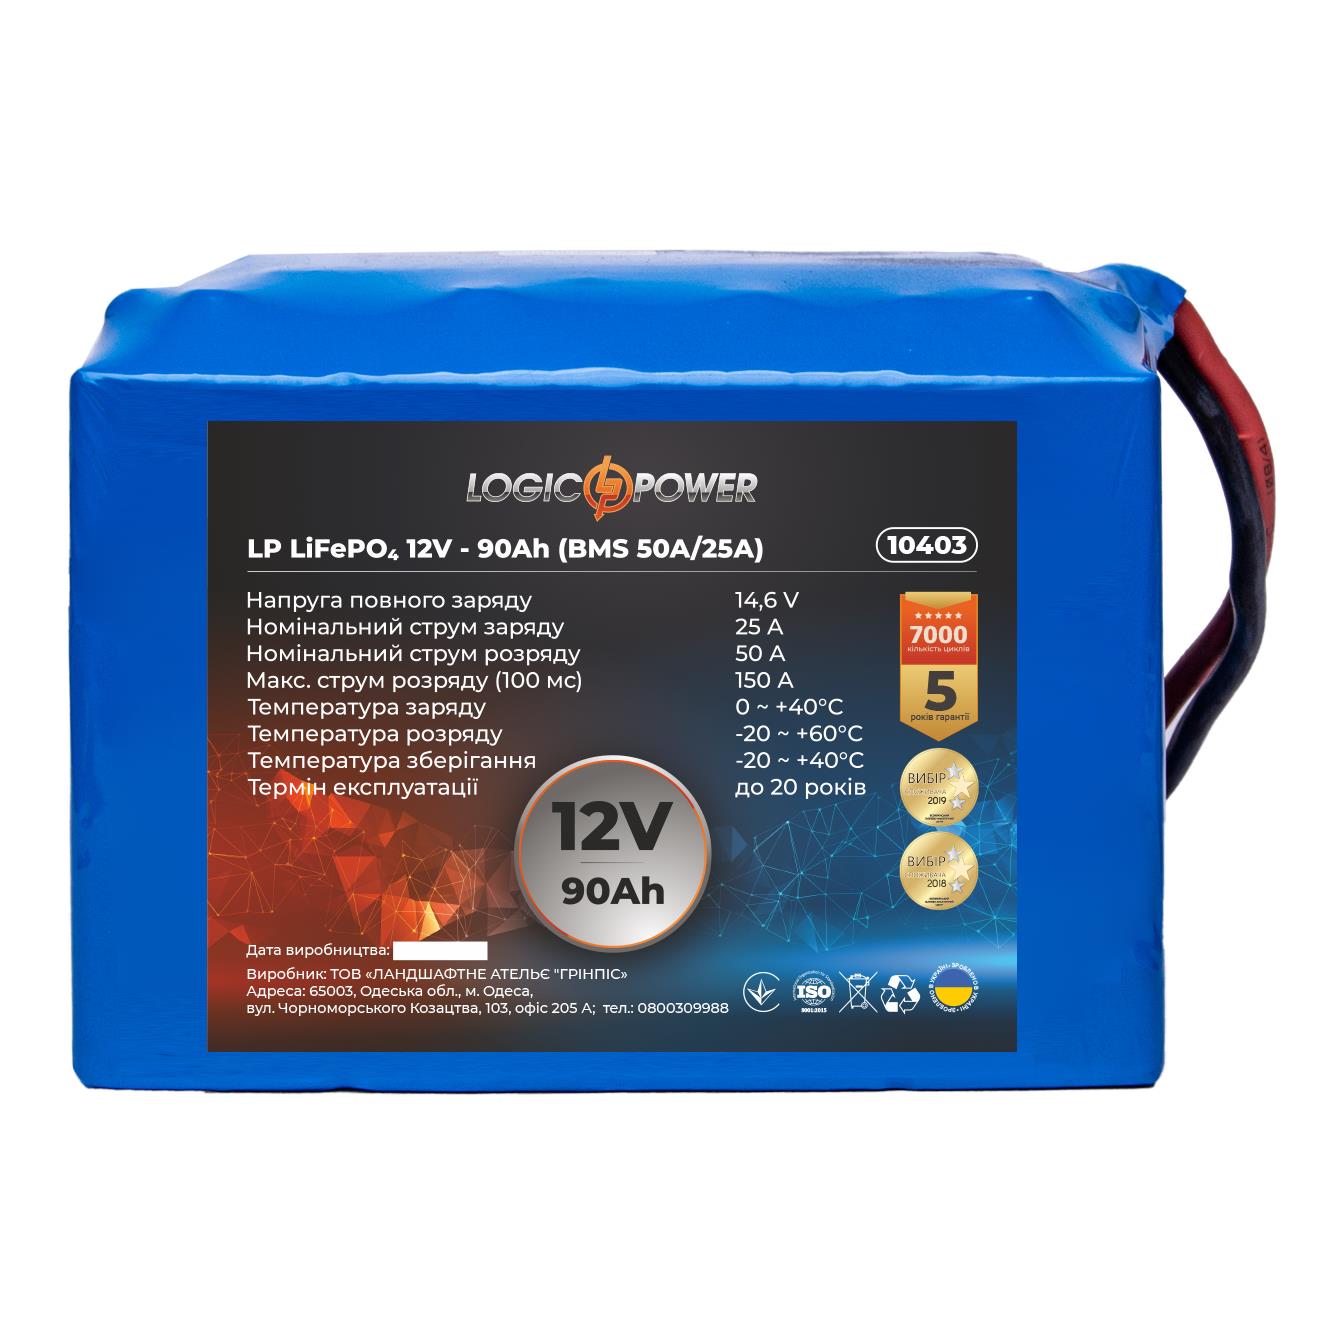 Аккумулятор литий-железо-фосфатный LogicPower LP LiFePO4 12V - 90 Ah (BMS 50A/25A) (10403)